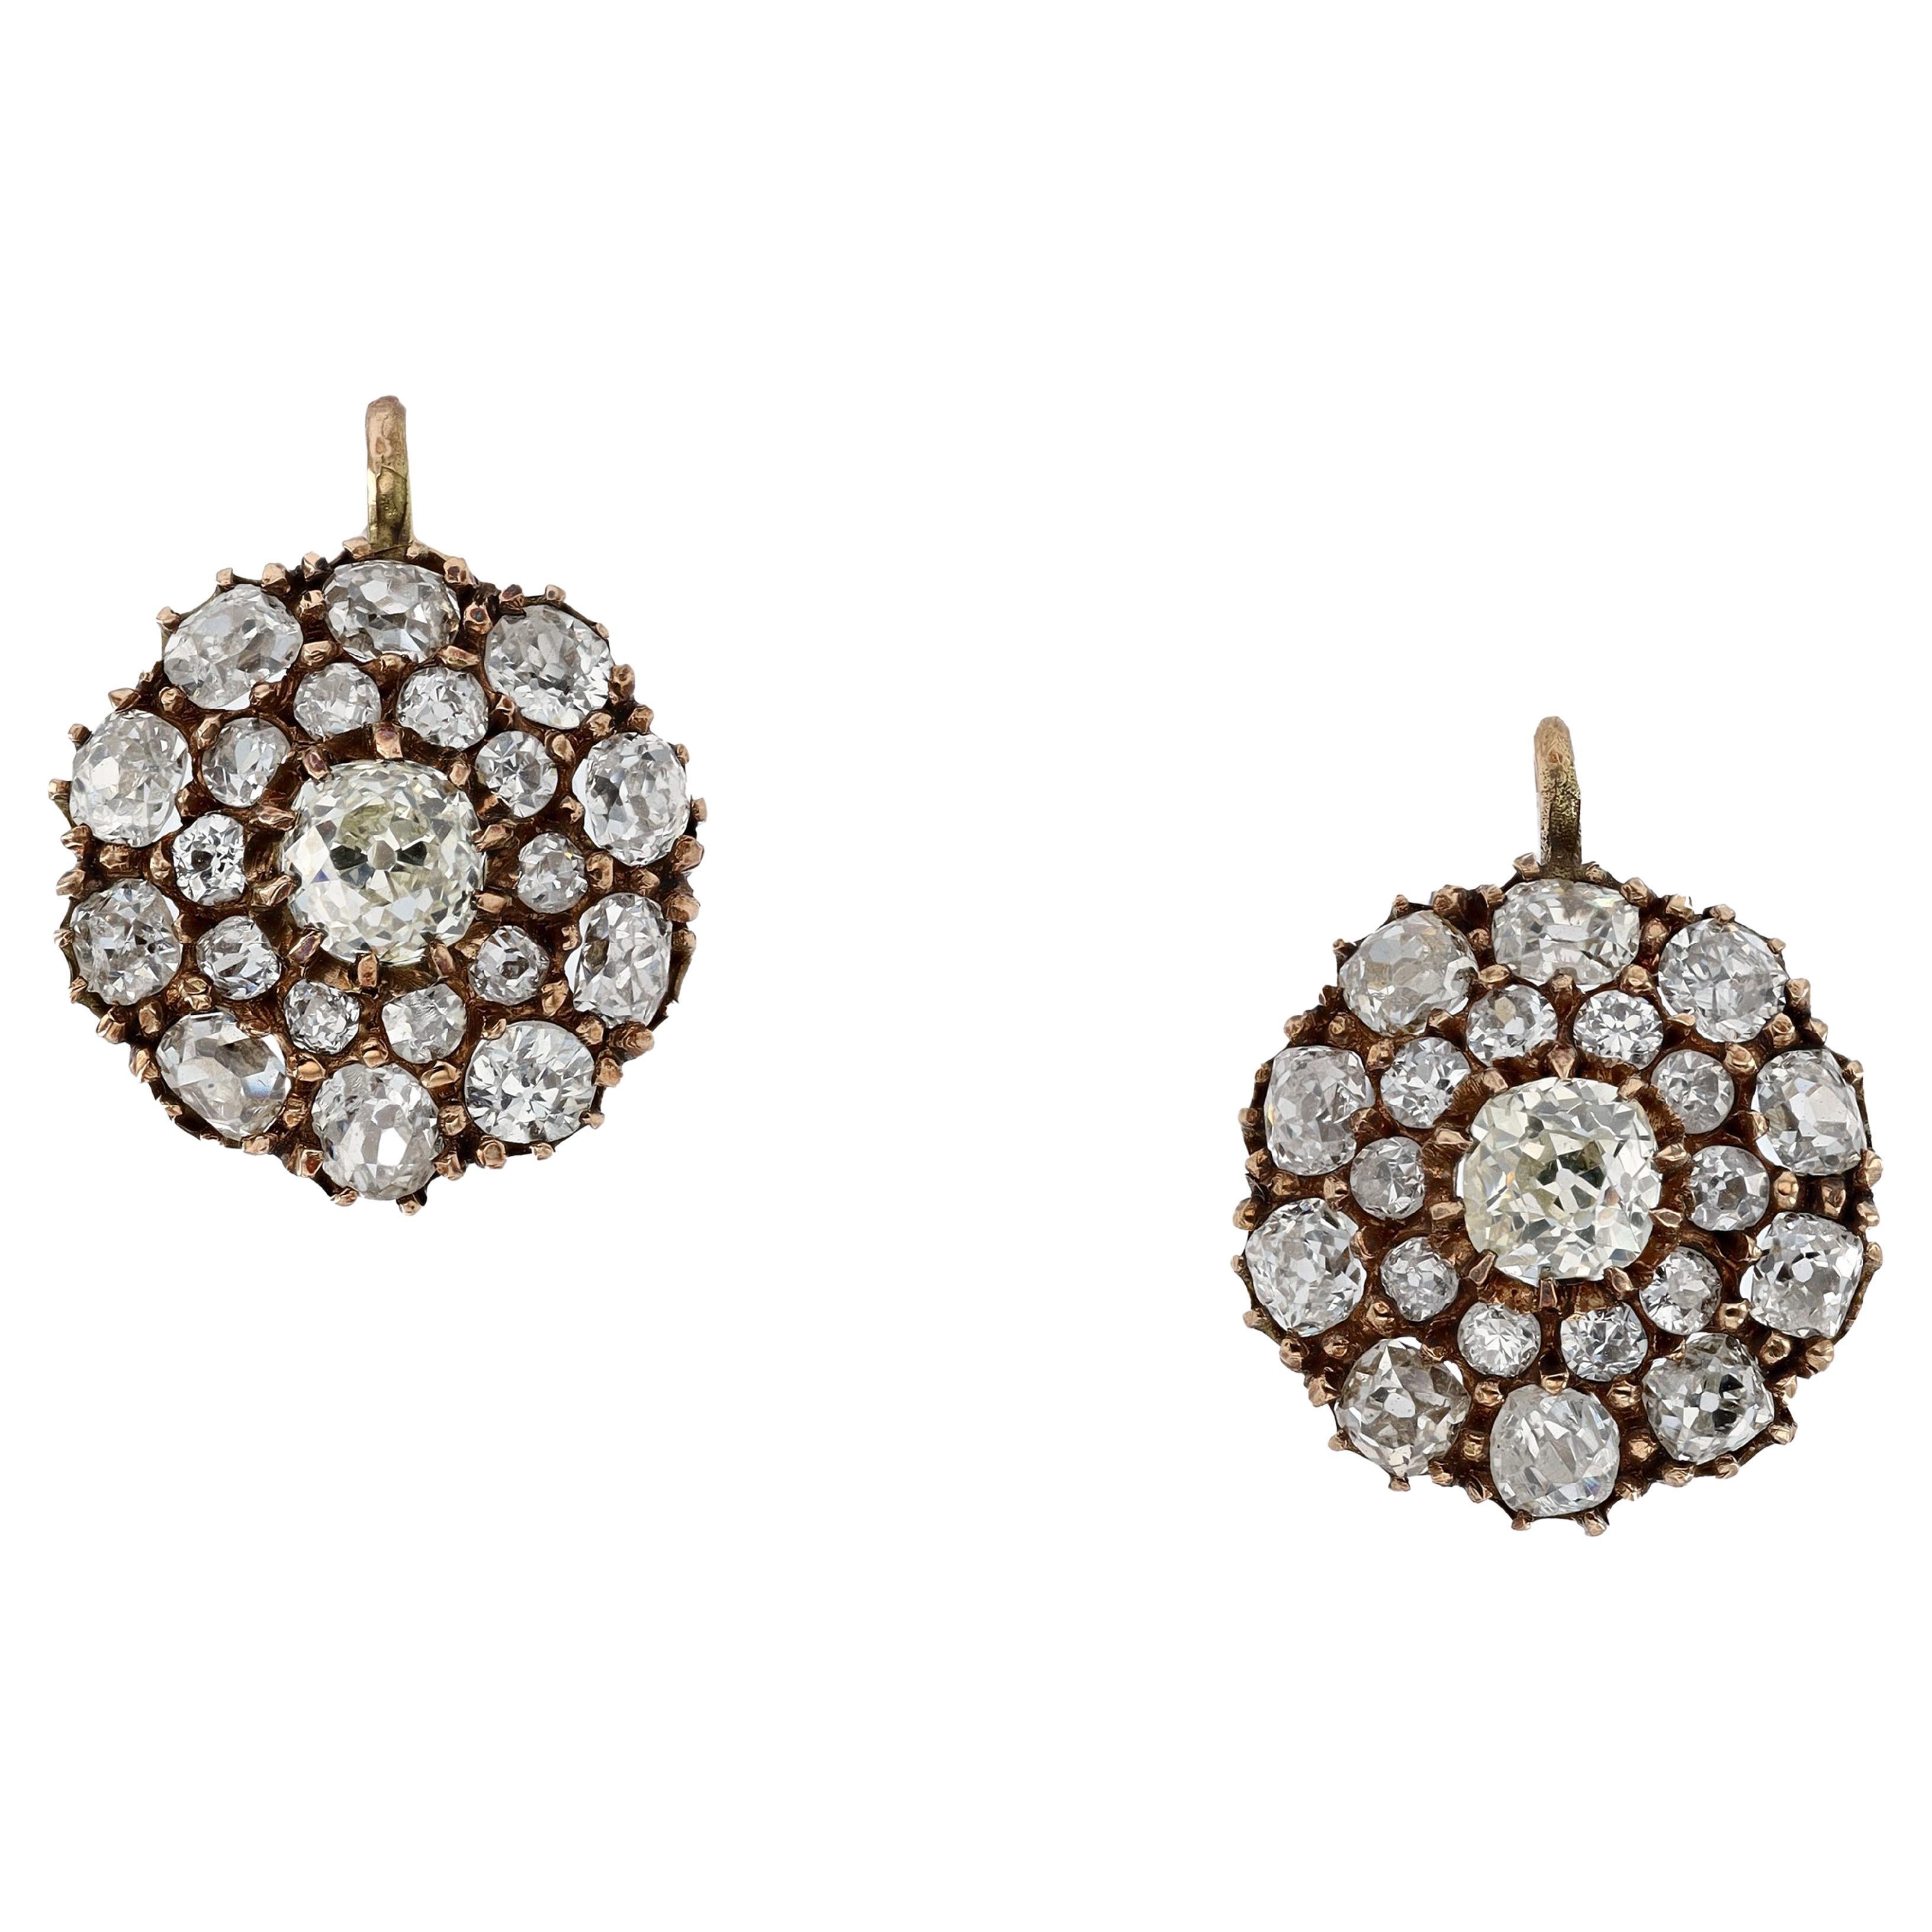 Outstanding Victorian 5 1/2 Carat Old Mine Diamond Earrings